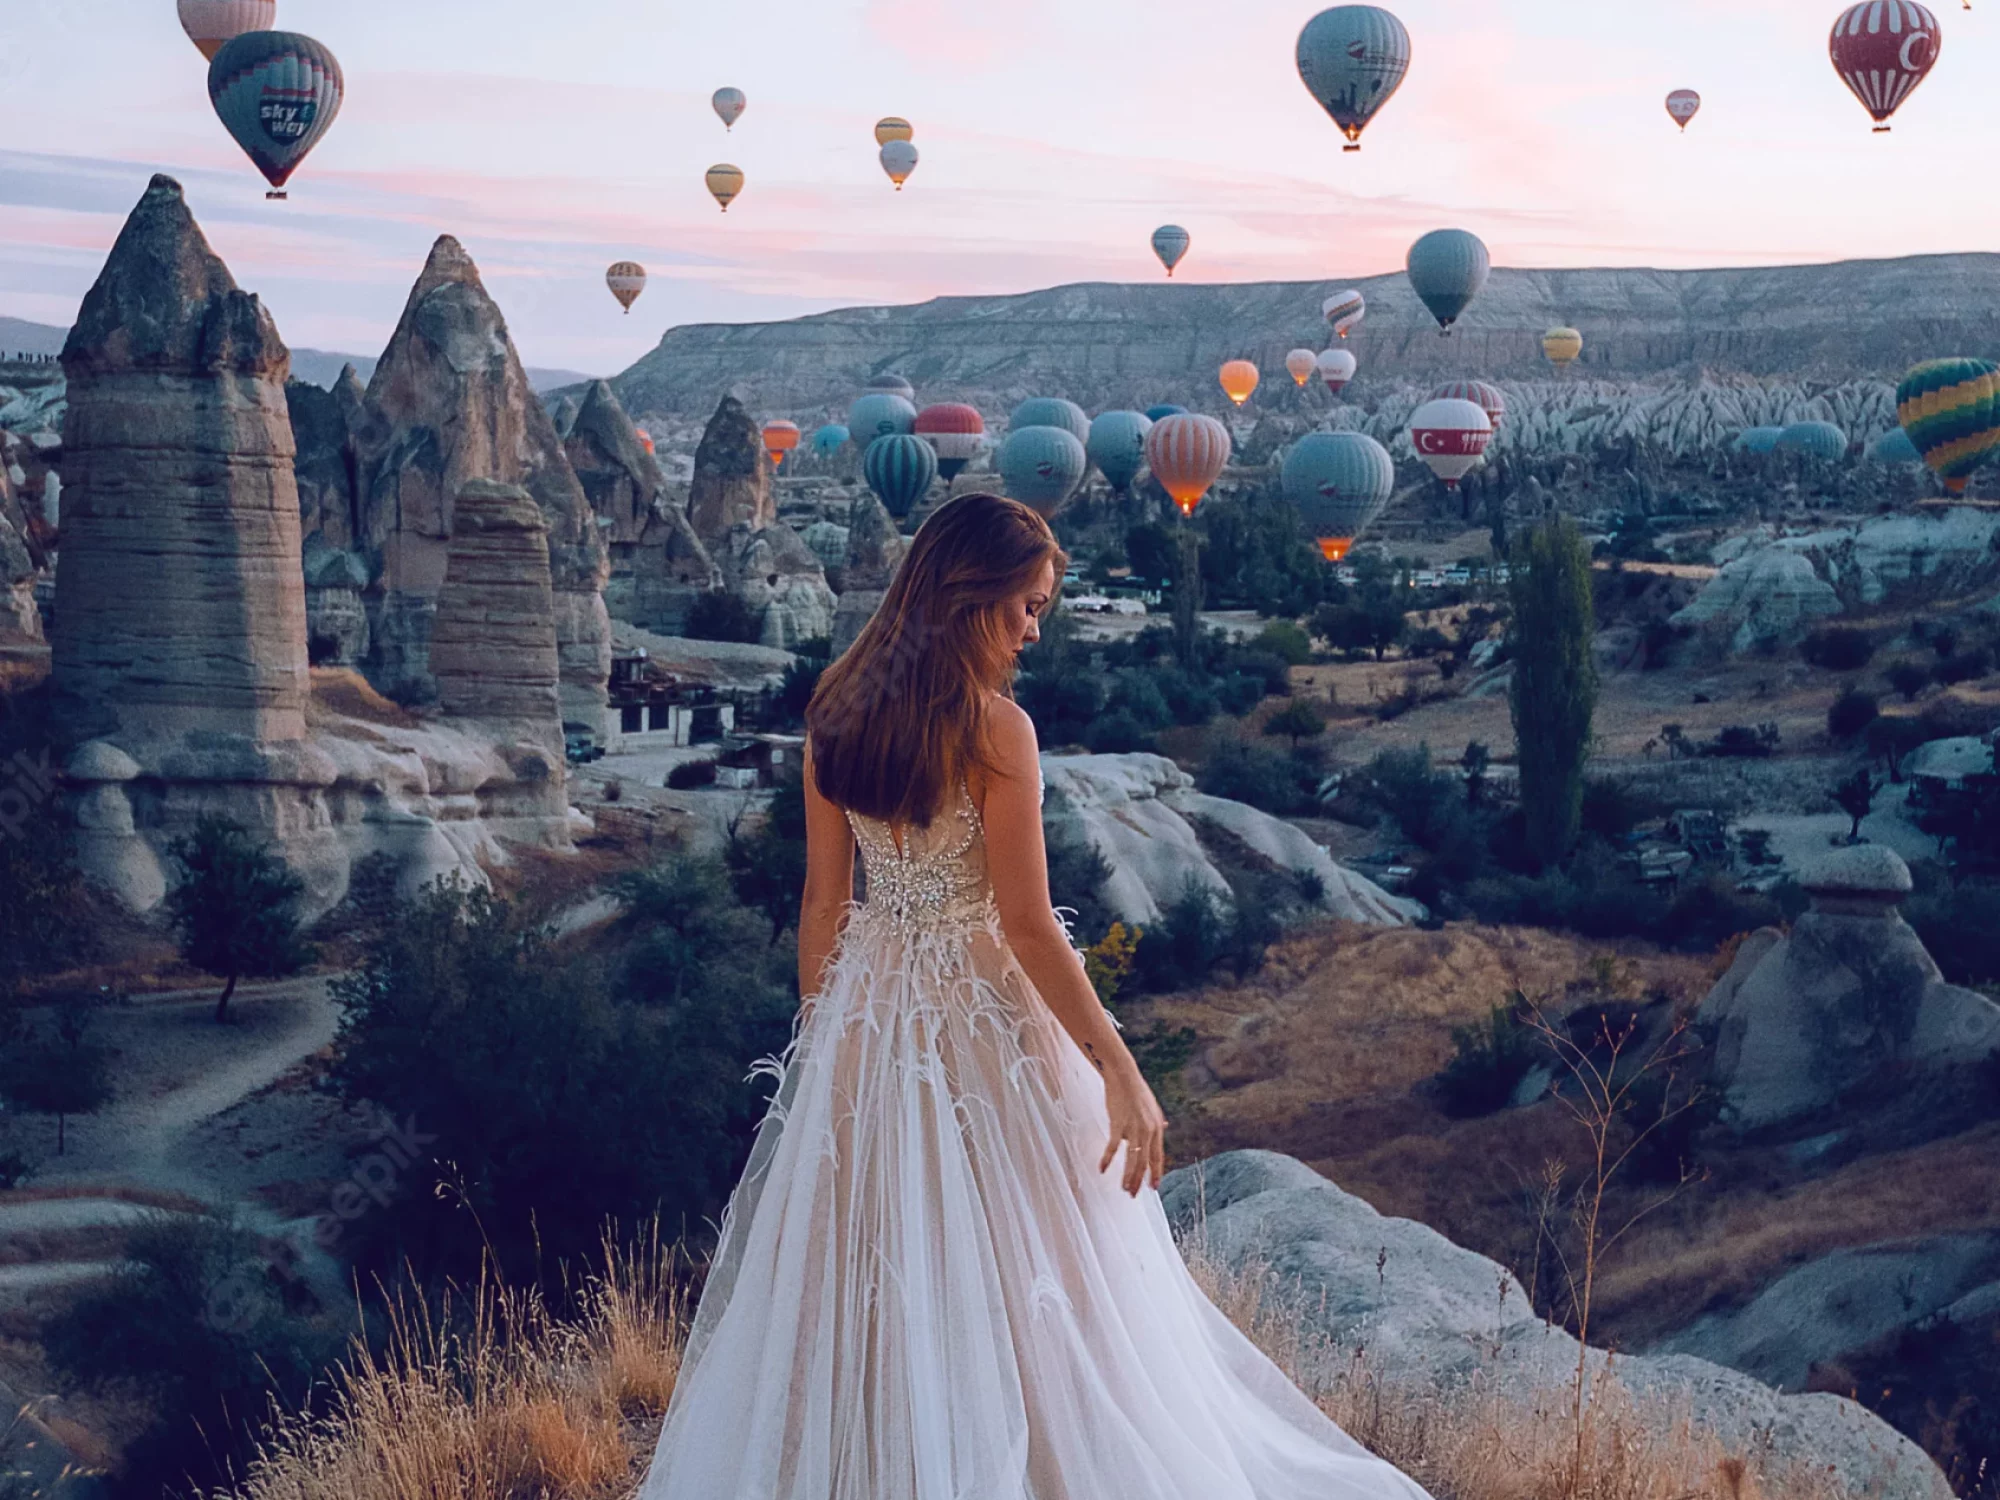 wedding-session-cappadocia-turkey-with-hot-air-balloons_152625-2430